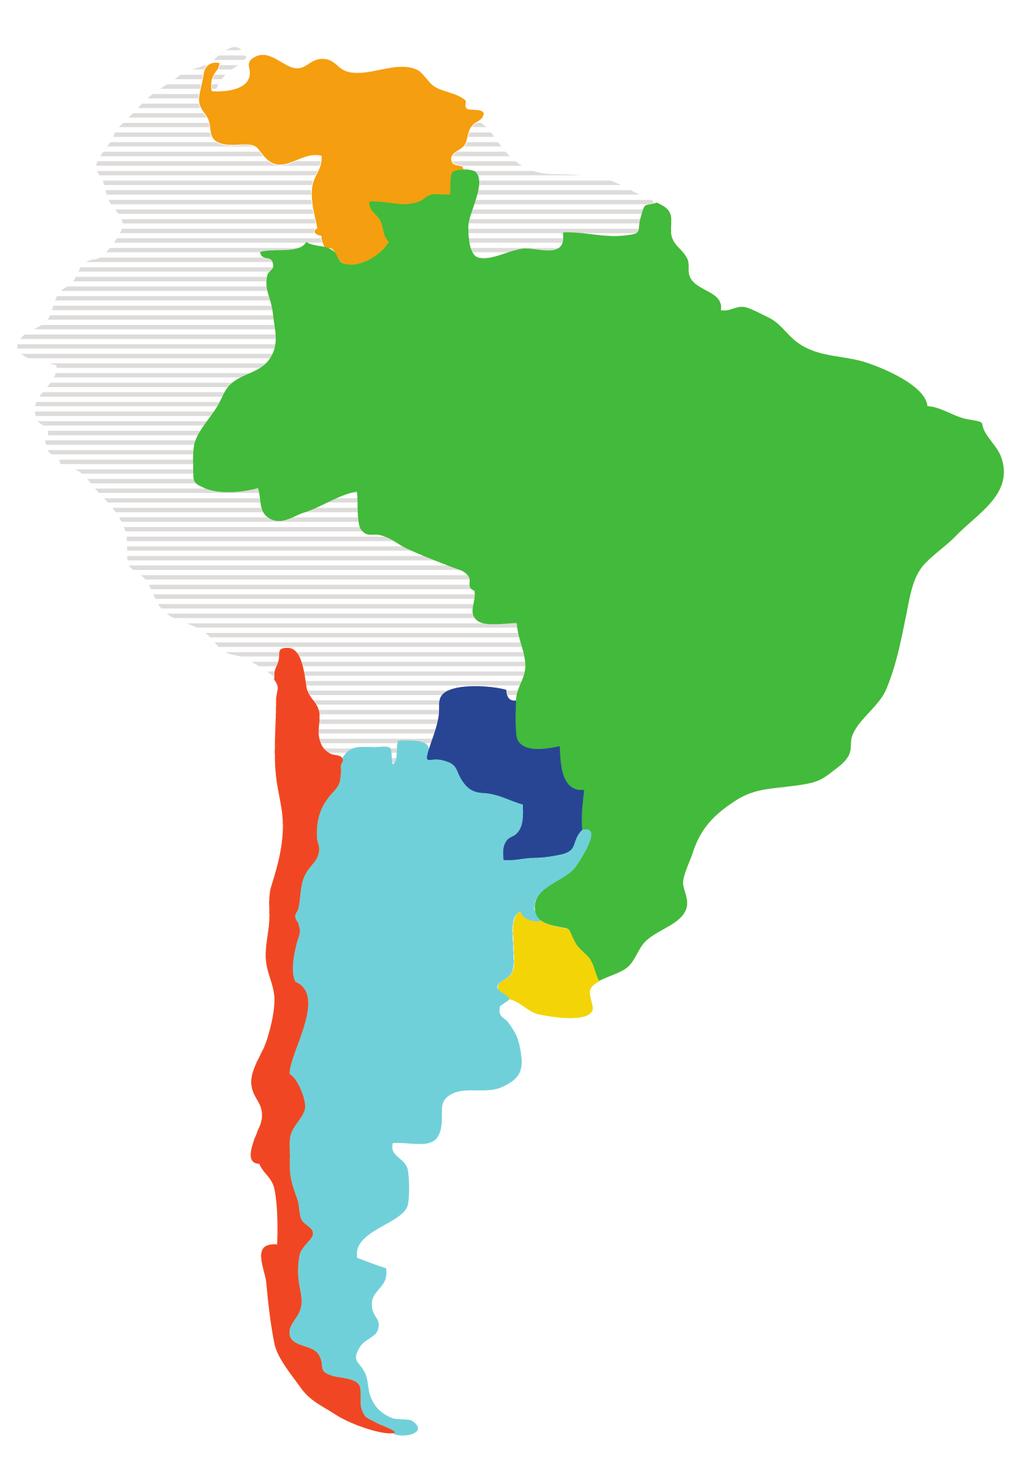 Paraguay, Uruguay and Venezuela.